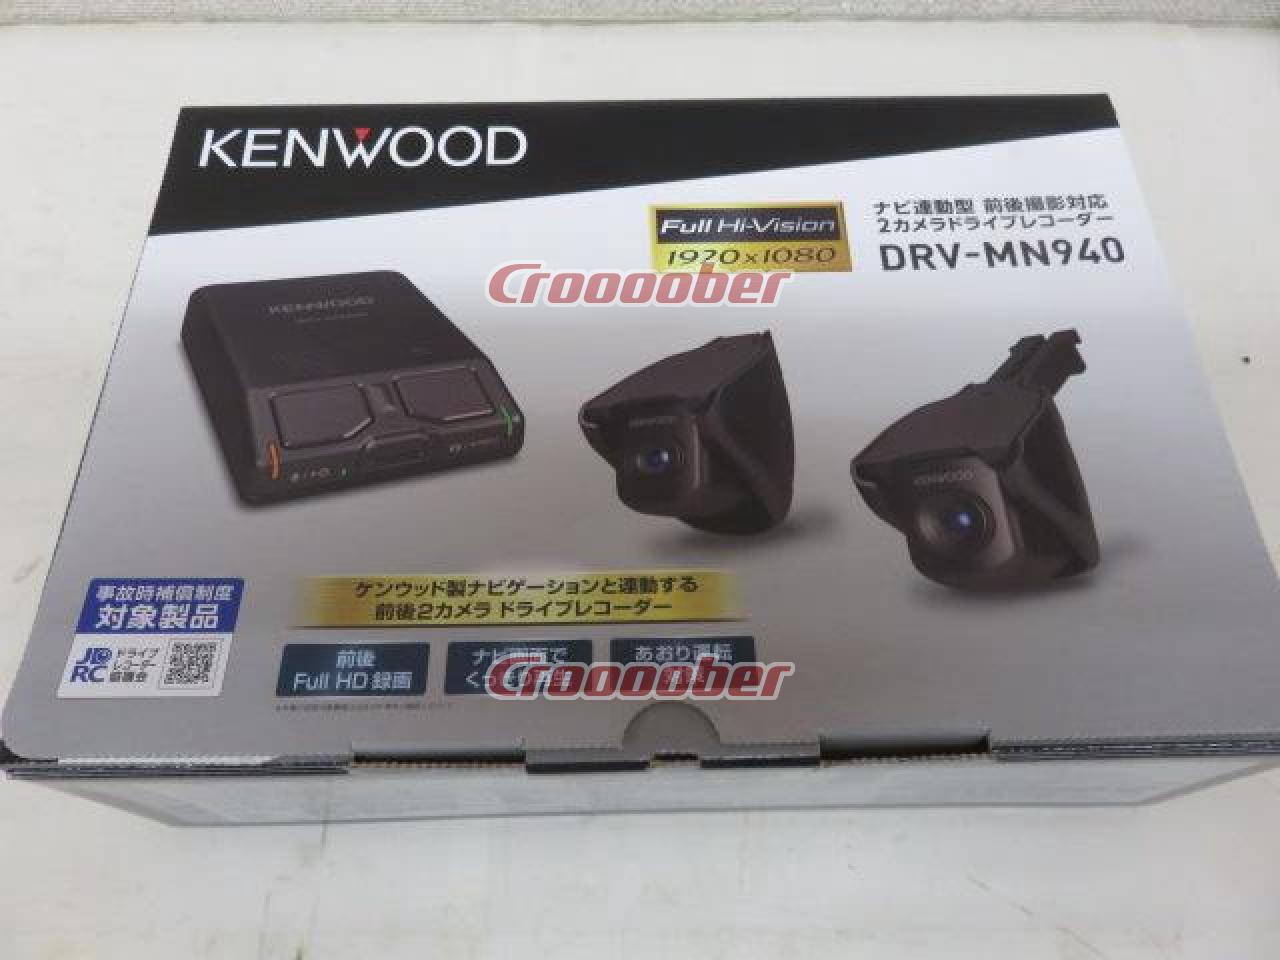 Kenwood DRV-MN940 | Drive Recorder | Croooober